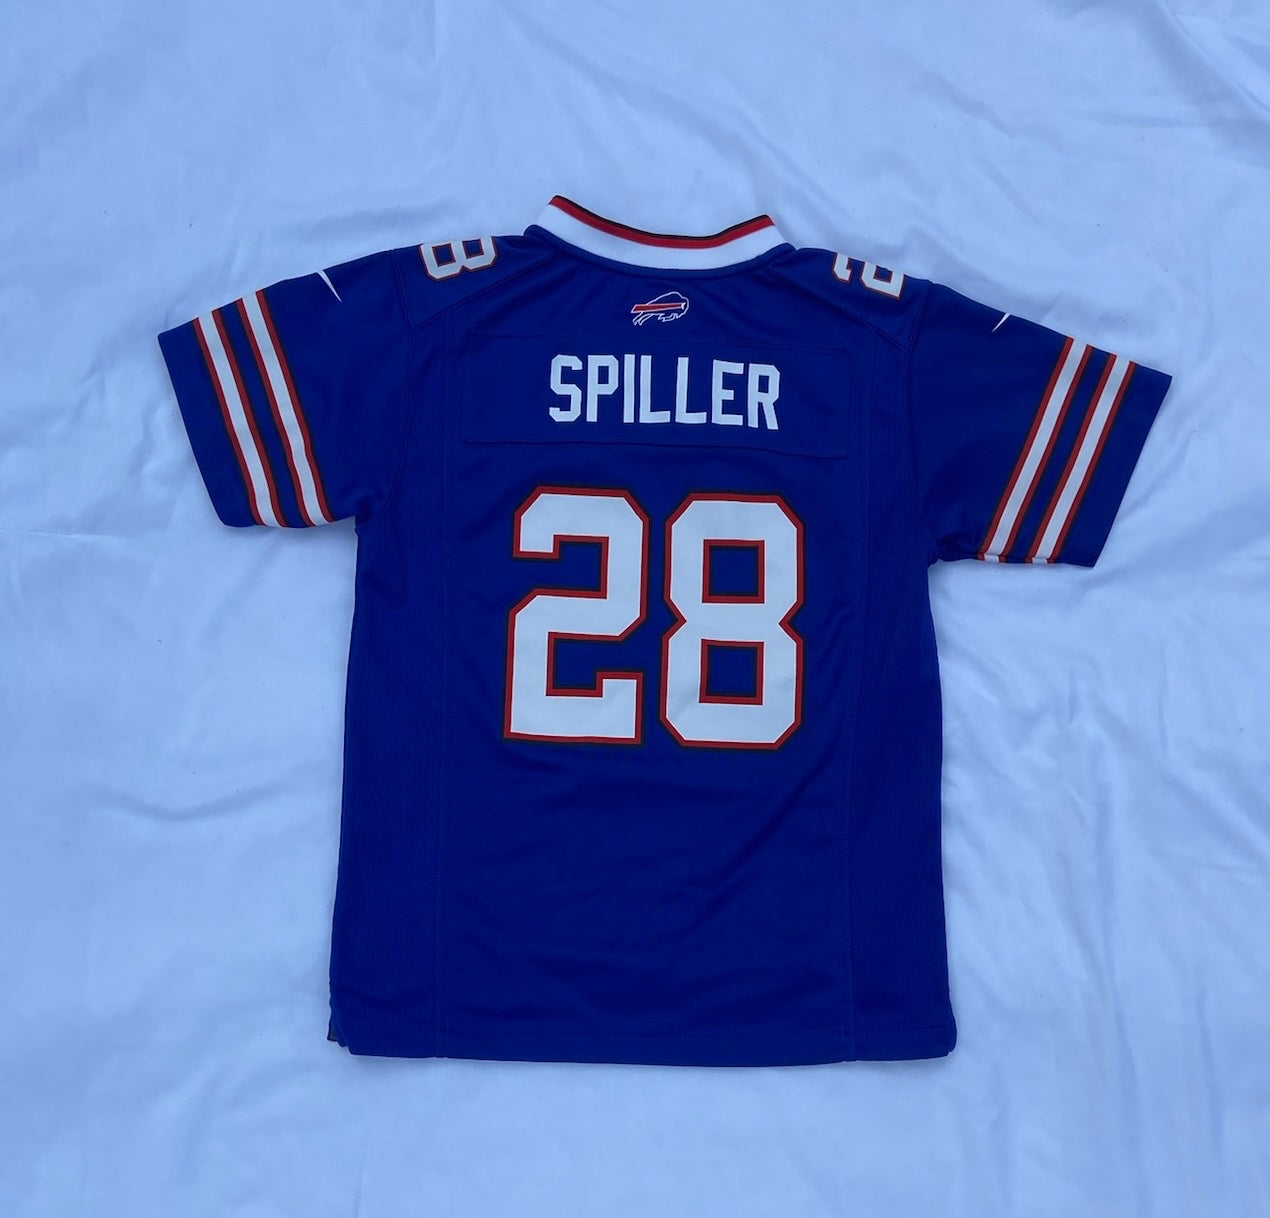 Bills Spiller Jersey- WILL BE CROPPED